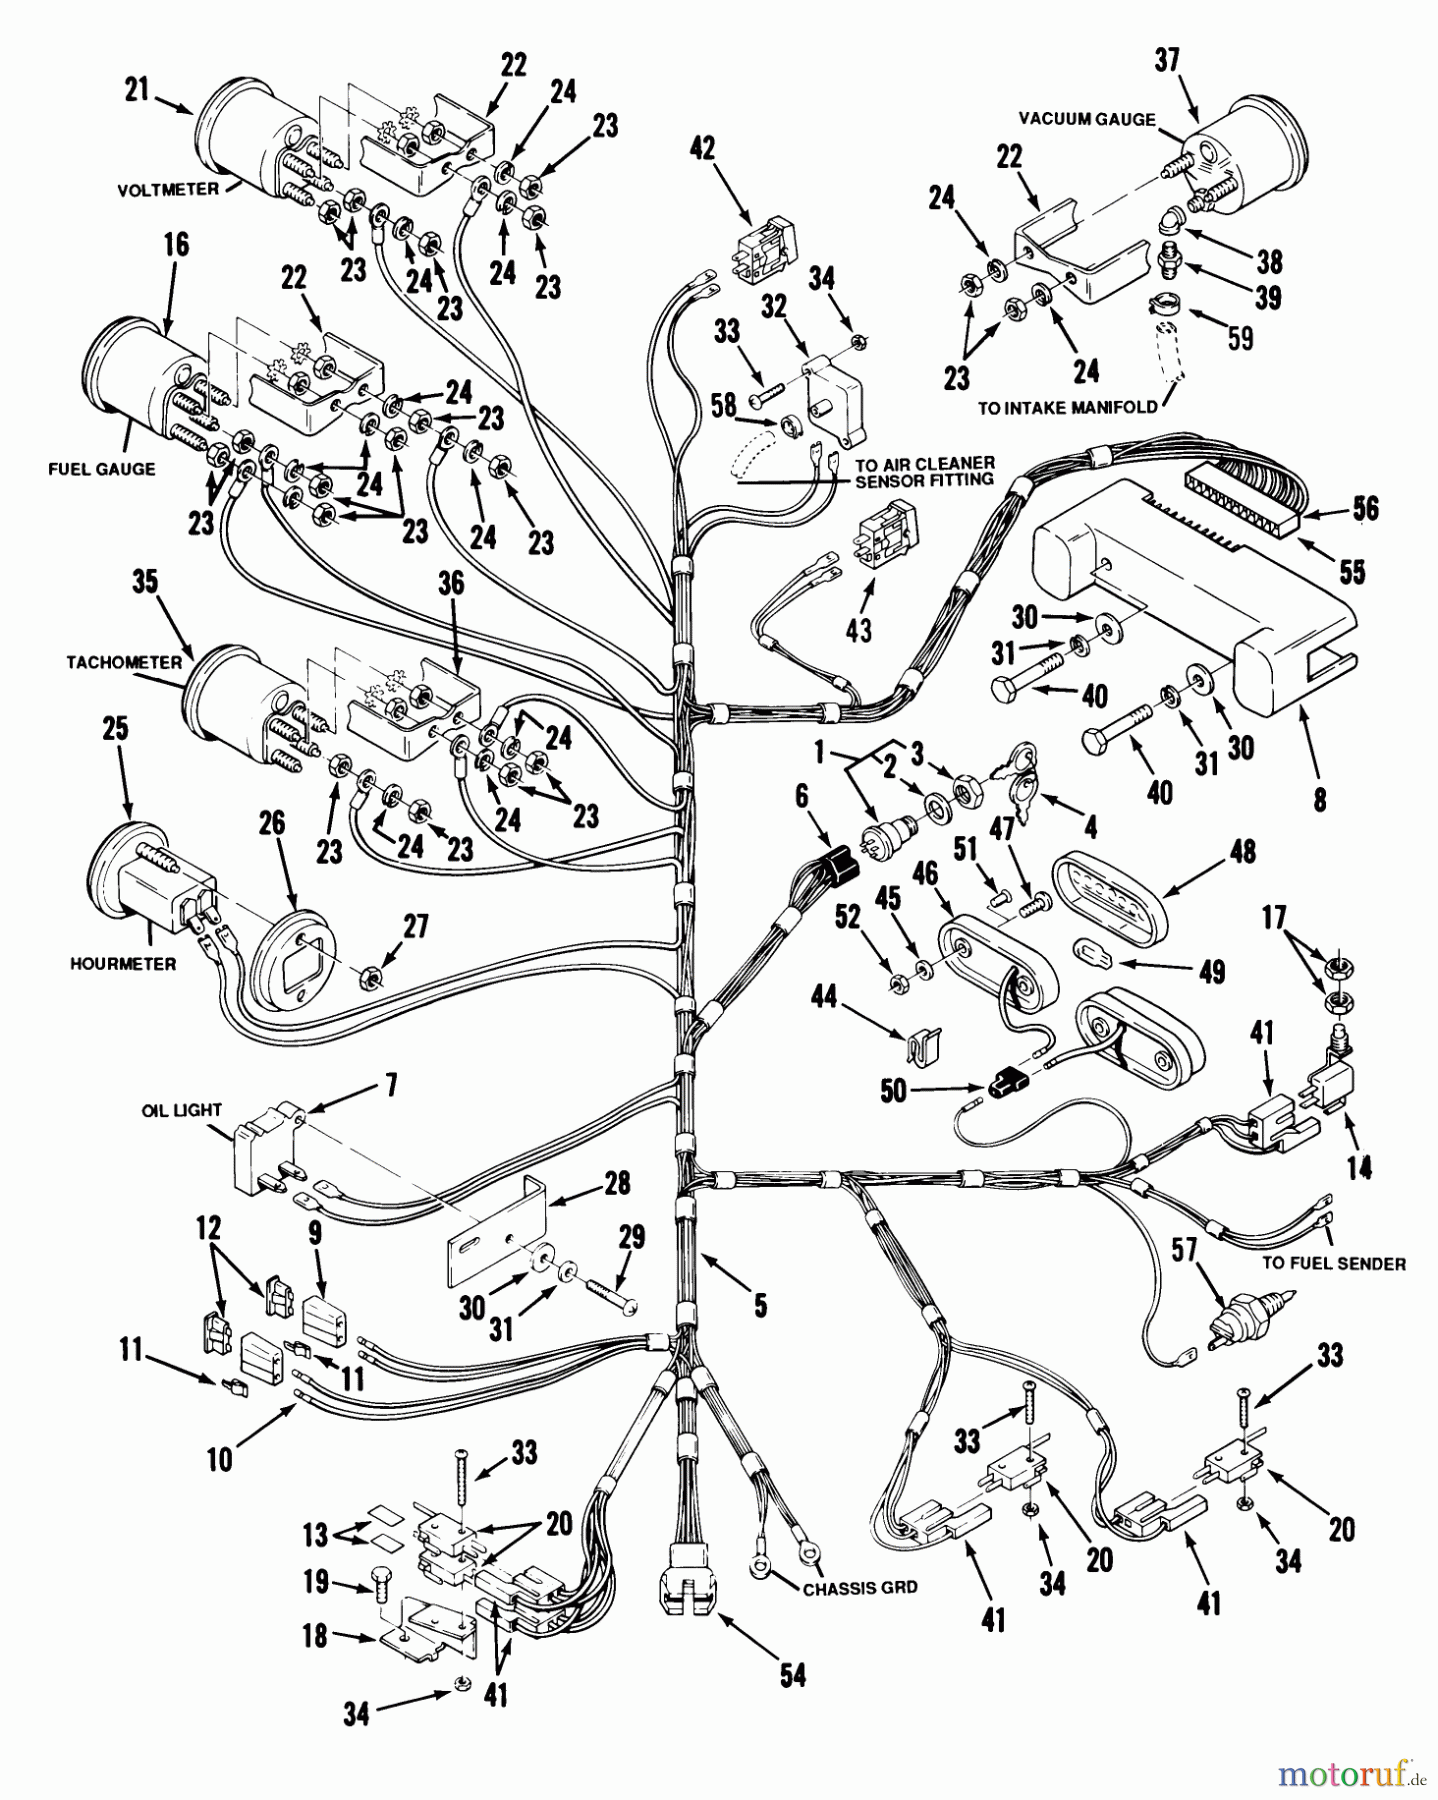  Toro Neu Mowers, Lawn & Garden Tractor Seite 1 31-20OE02 (520-H) - Toro 520-H Garden Tractor, 1989 ELECTRICAL SYSTEM #1